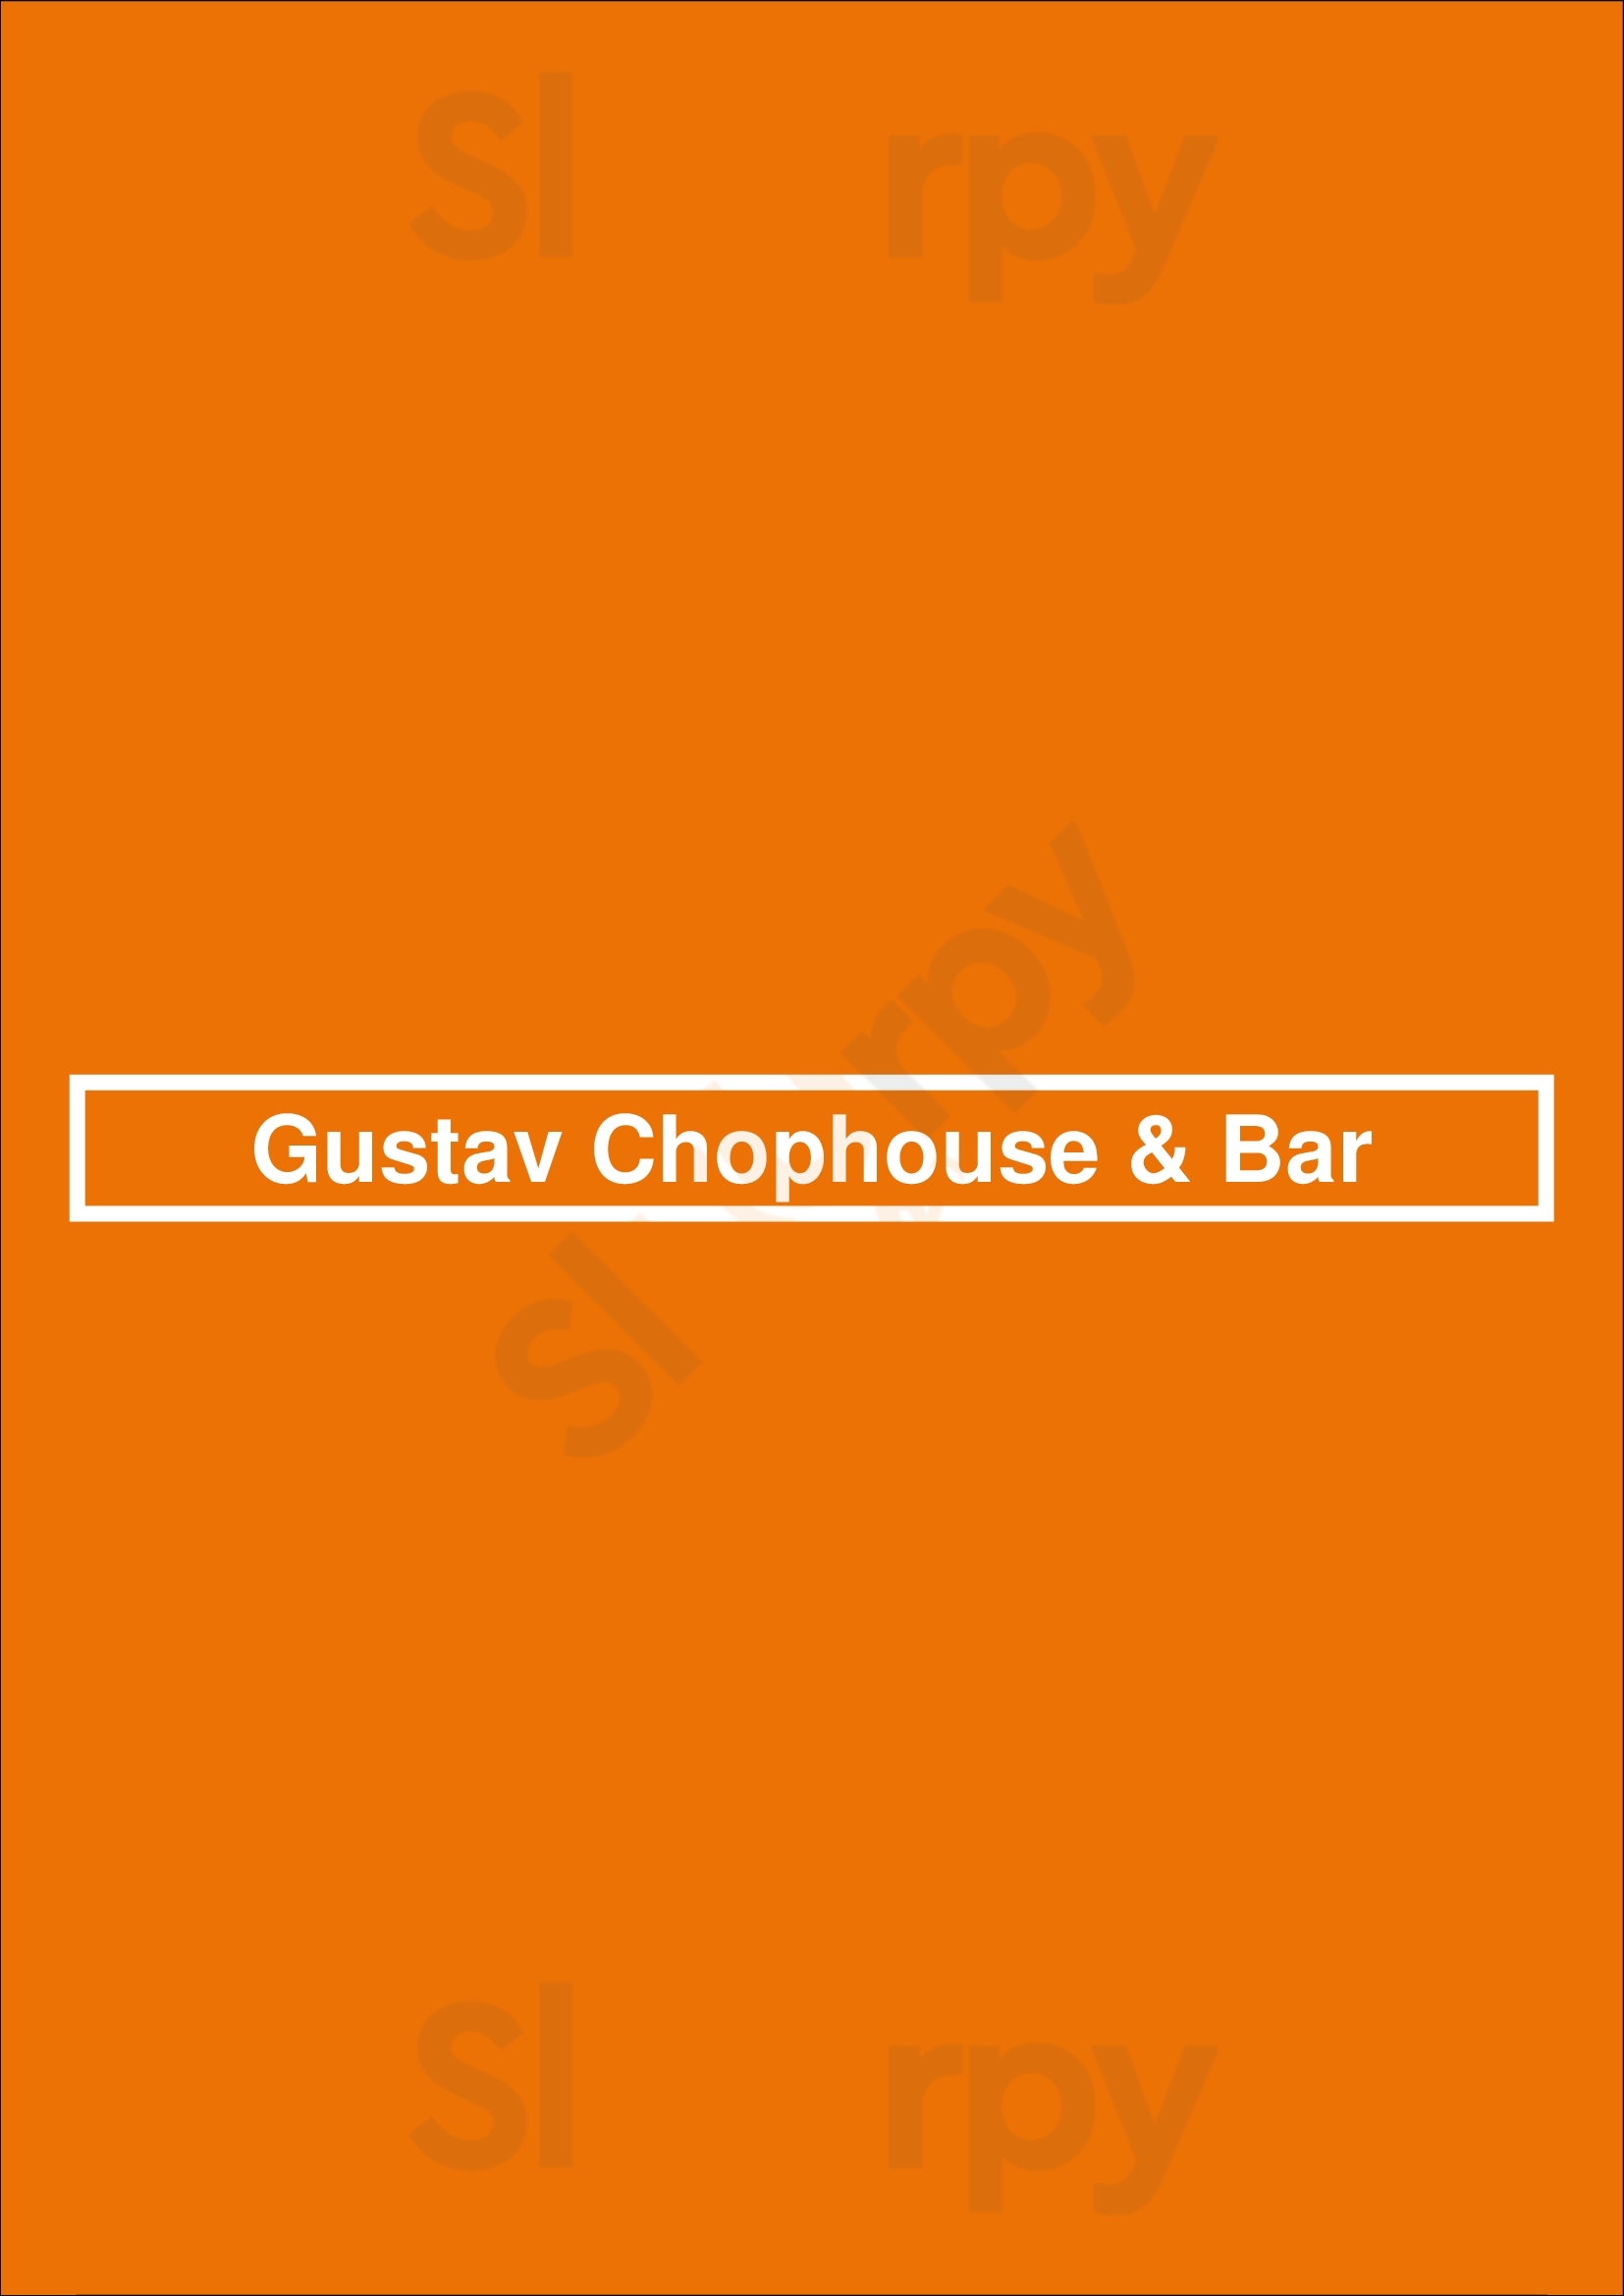 Gustav Chophouse & Bar Collingwood Menu - 1